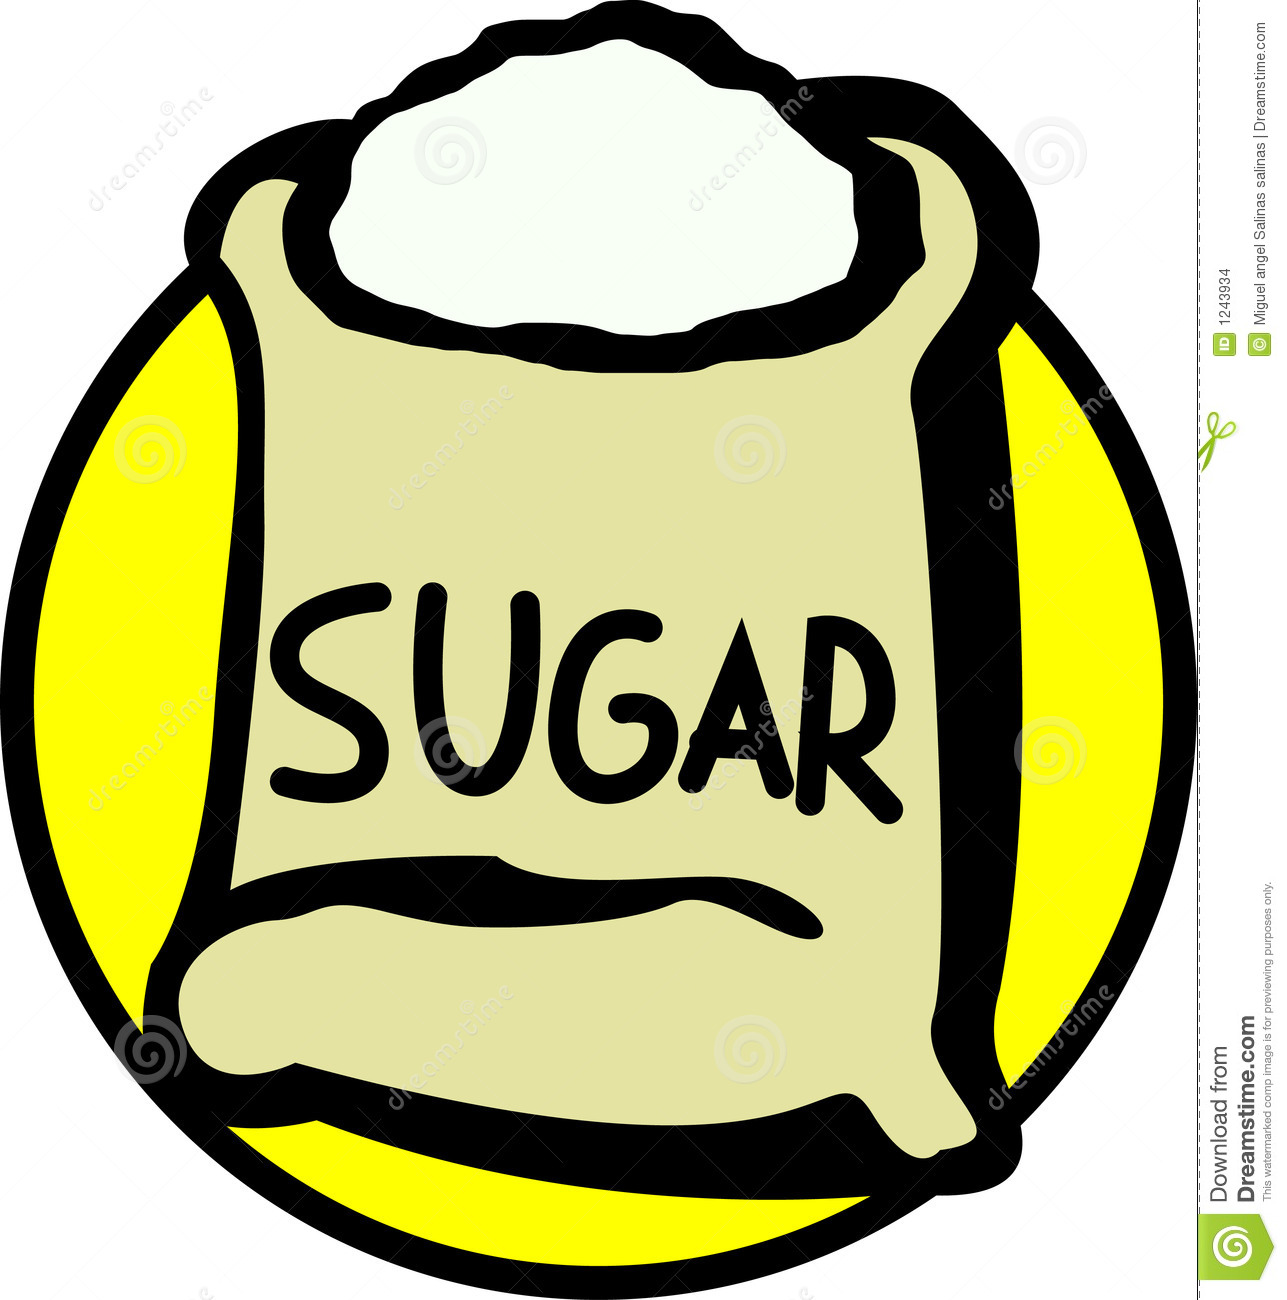 Sugar bag black and white clipart